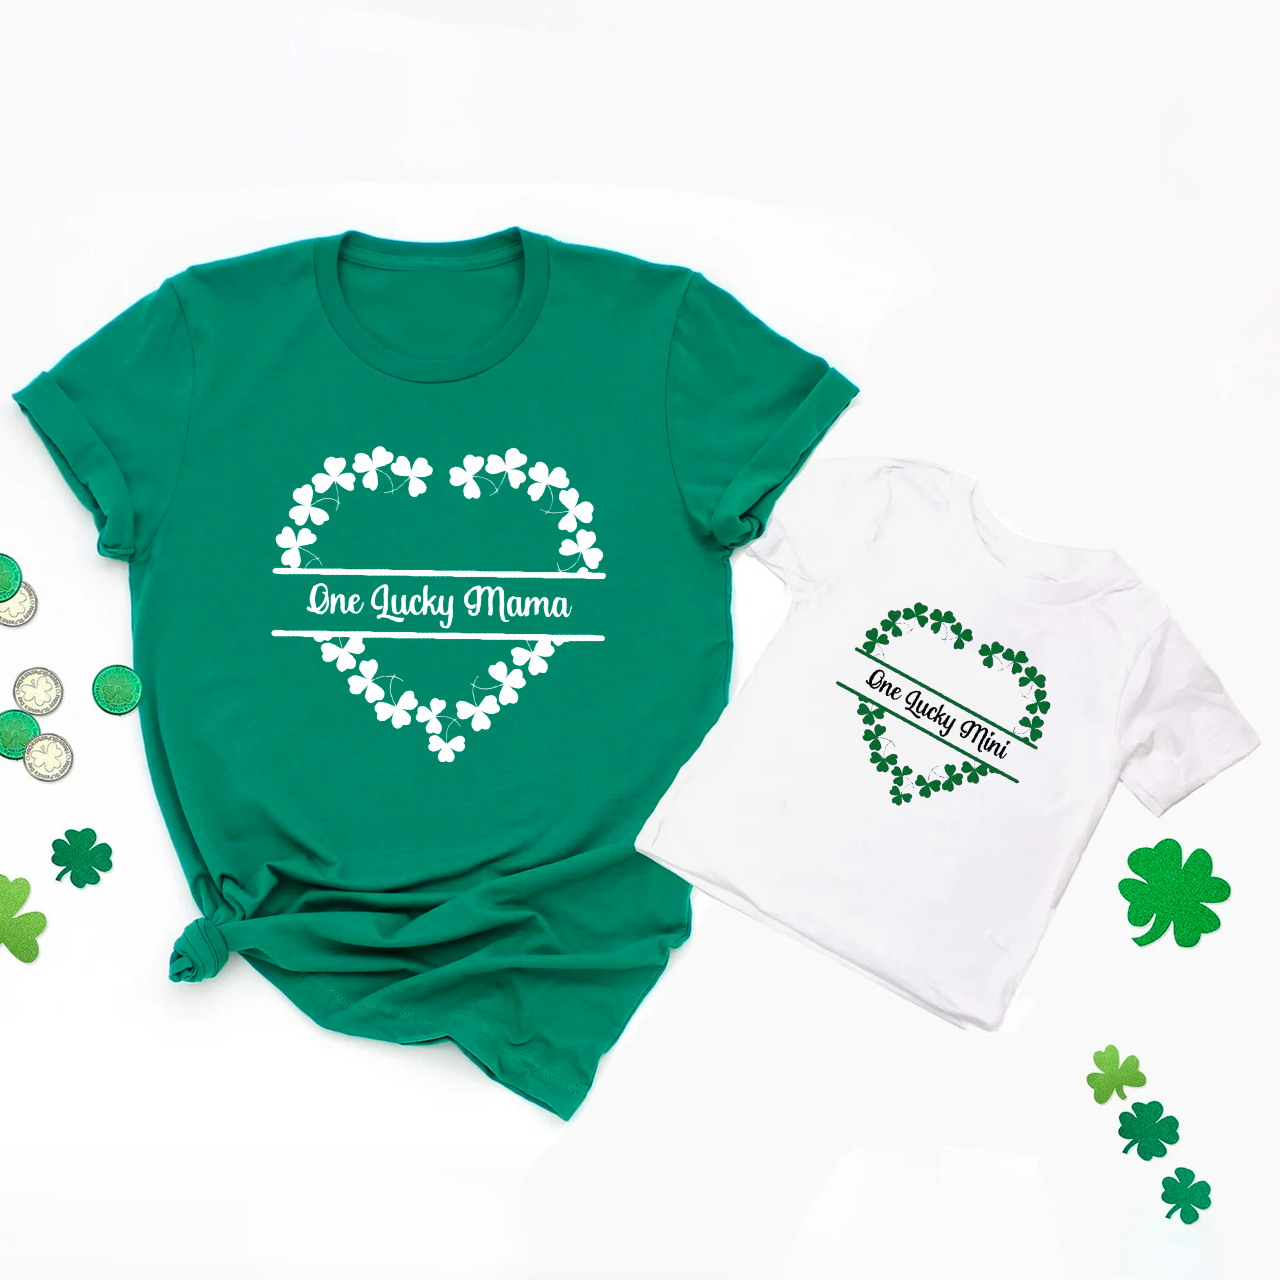 St Patrick's Day Shirt